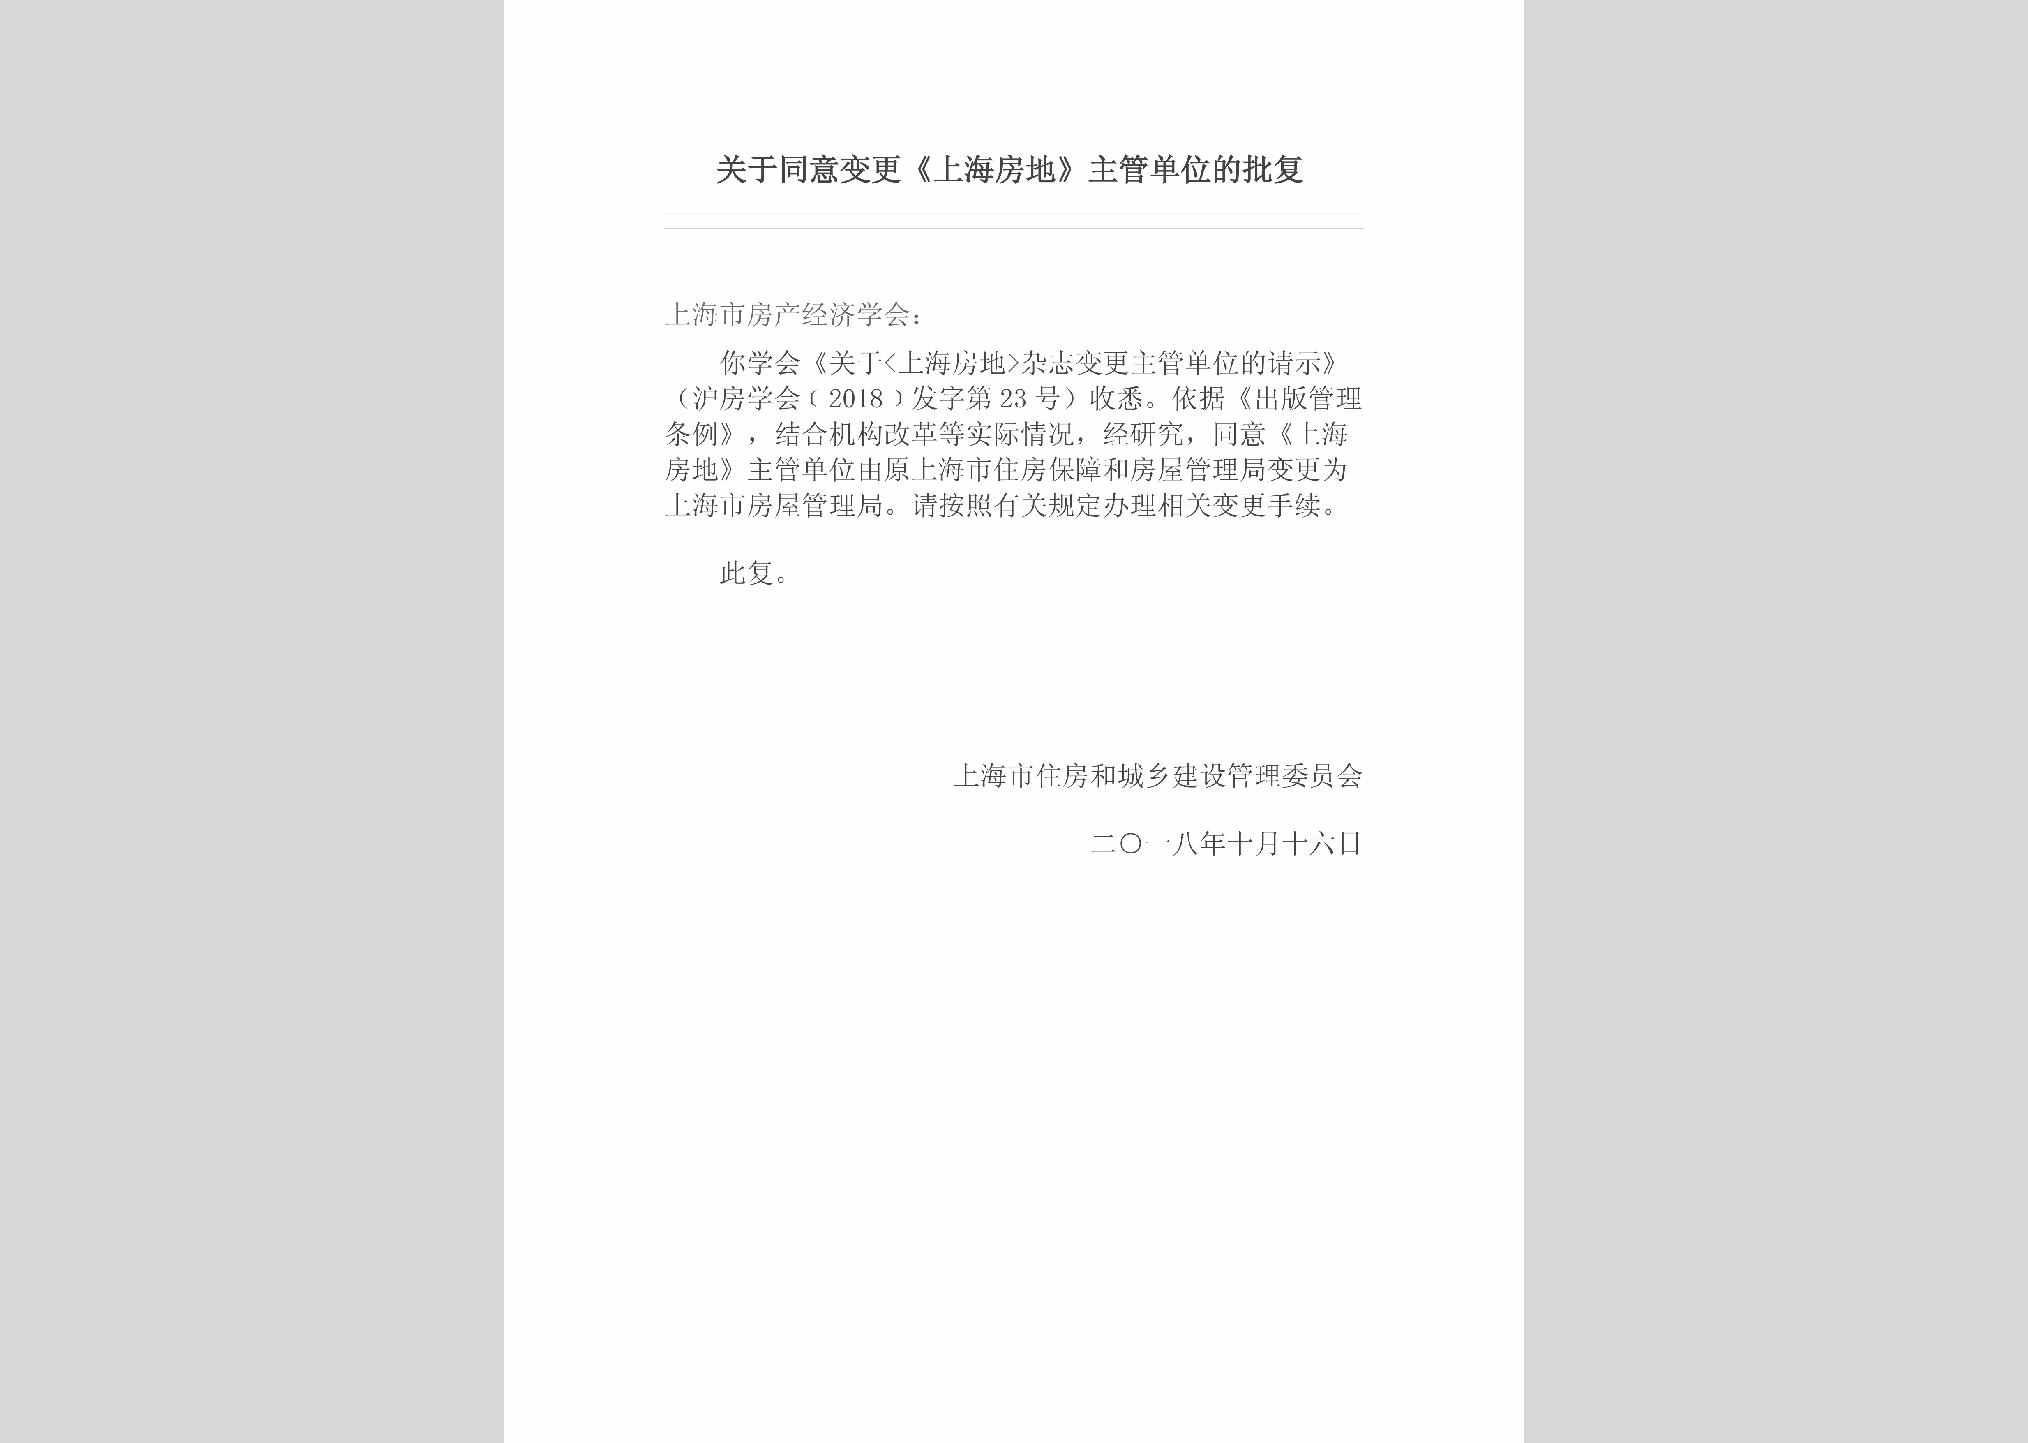 SH-SHFDZGDW-2018：关于同意变更《上海房地》主管单位的批复